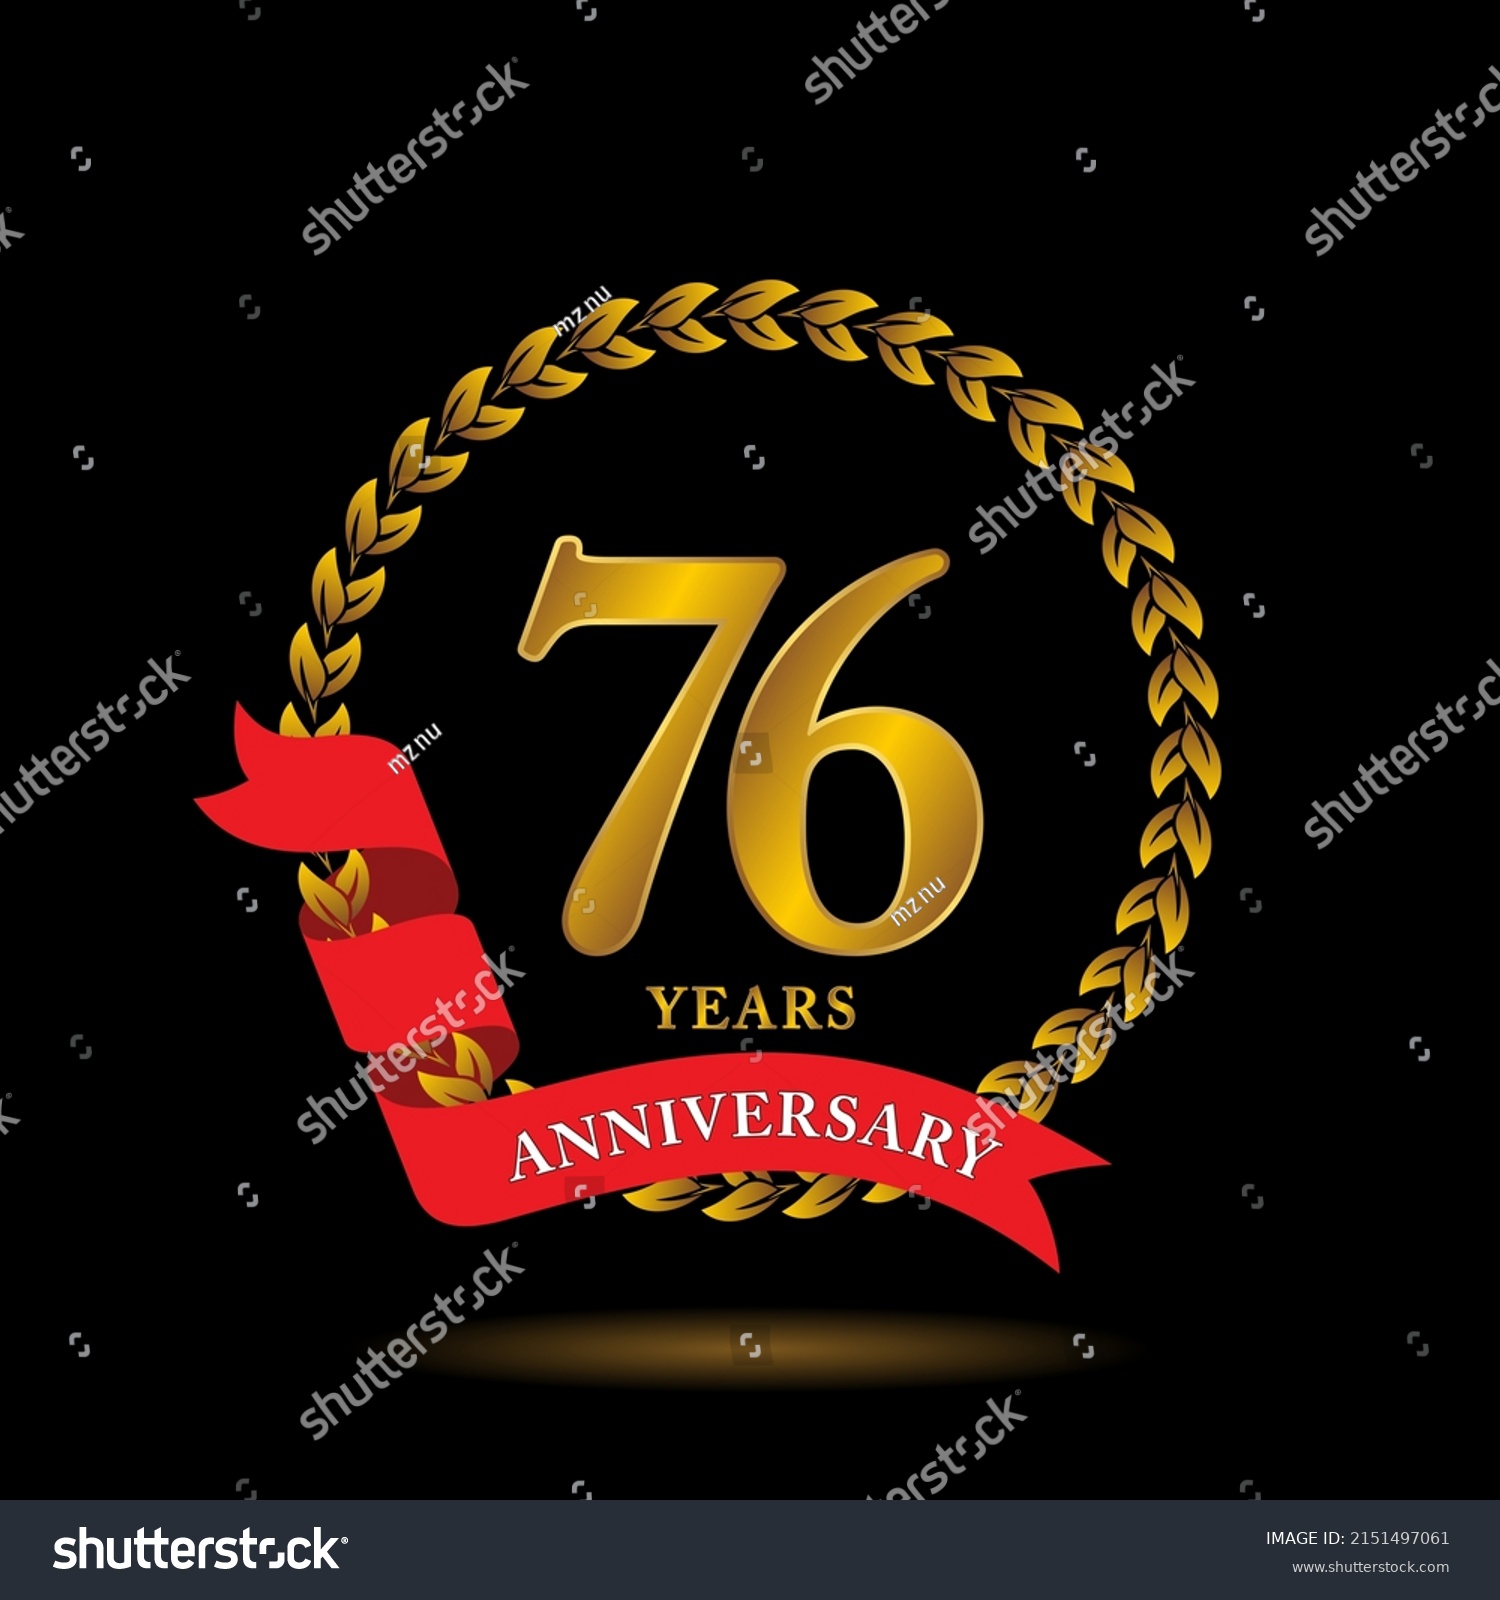 76th Anniversary Logo Anniversary Celebration Template Stock Vector Royalty Free 2151497061 7899